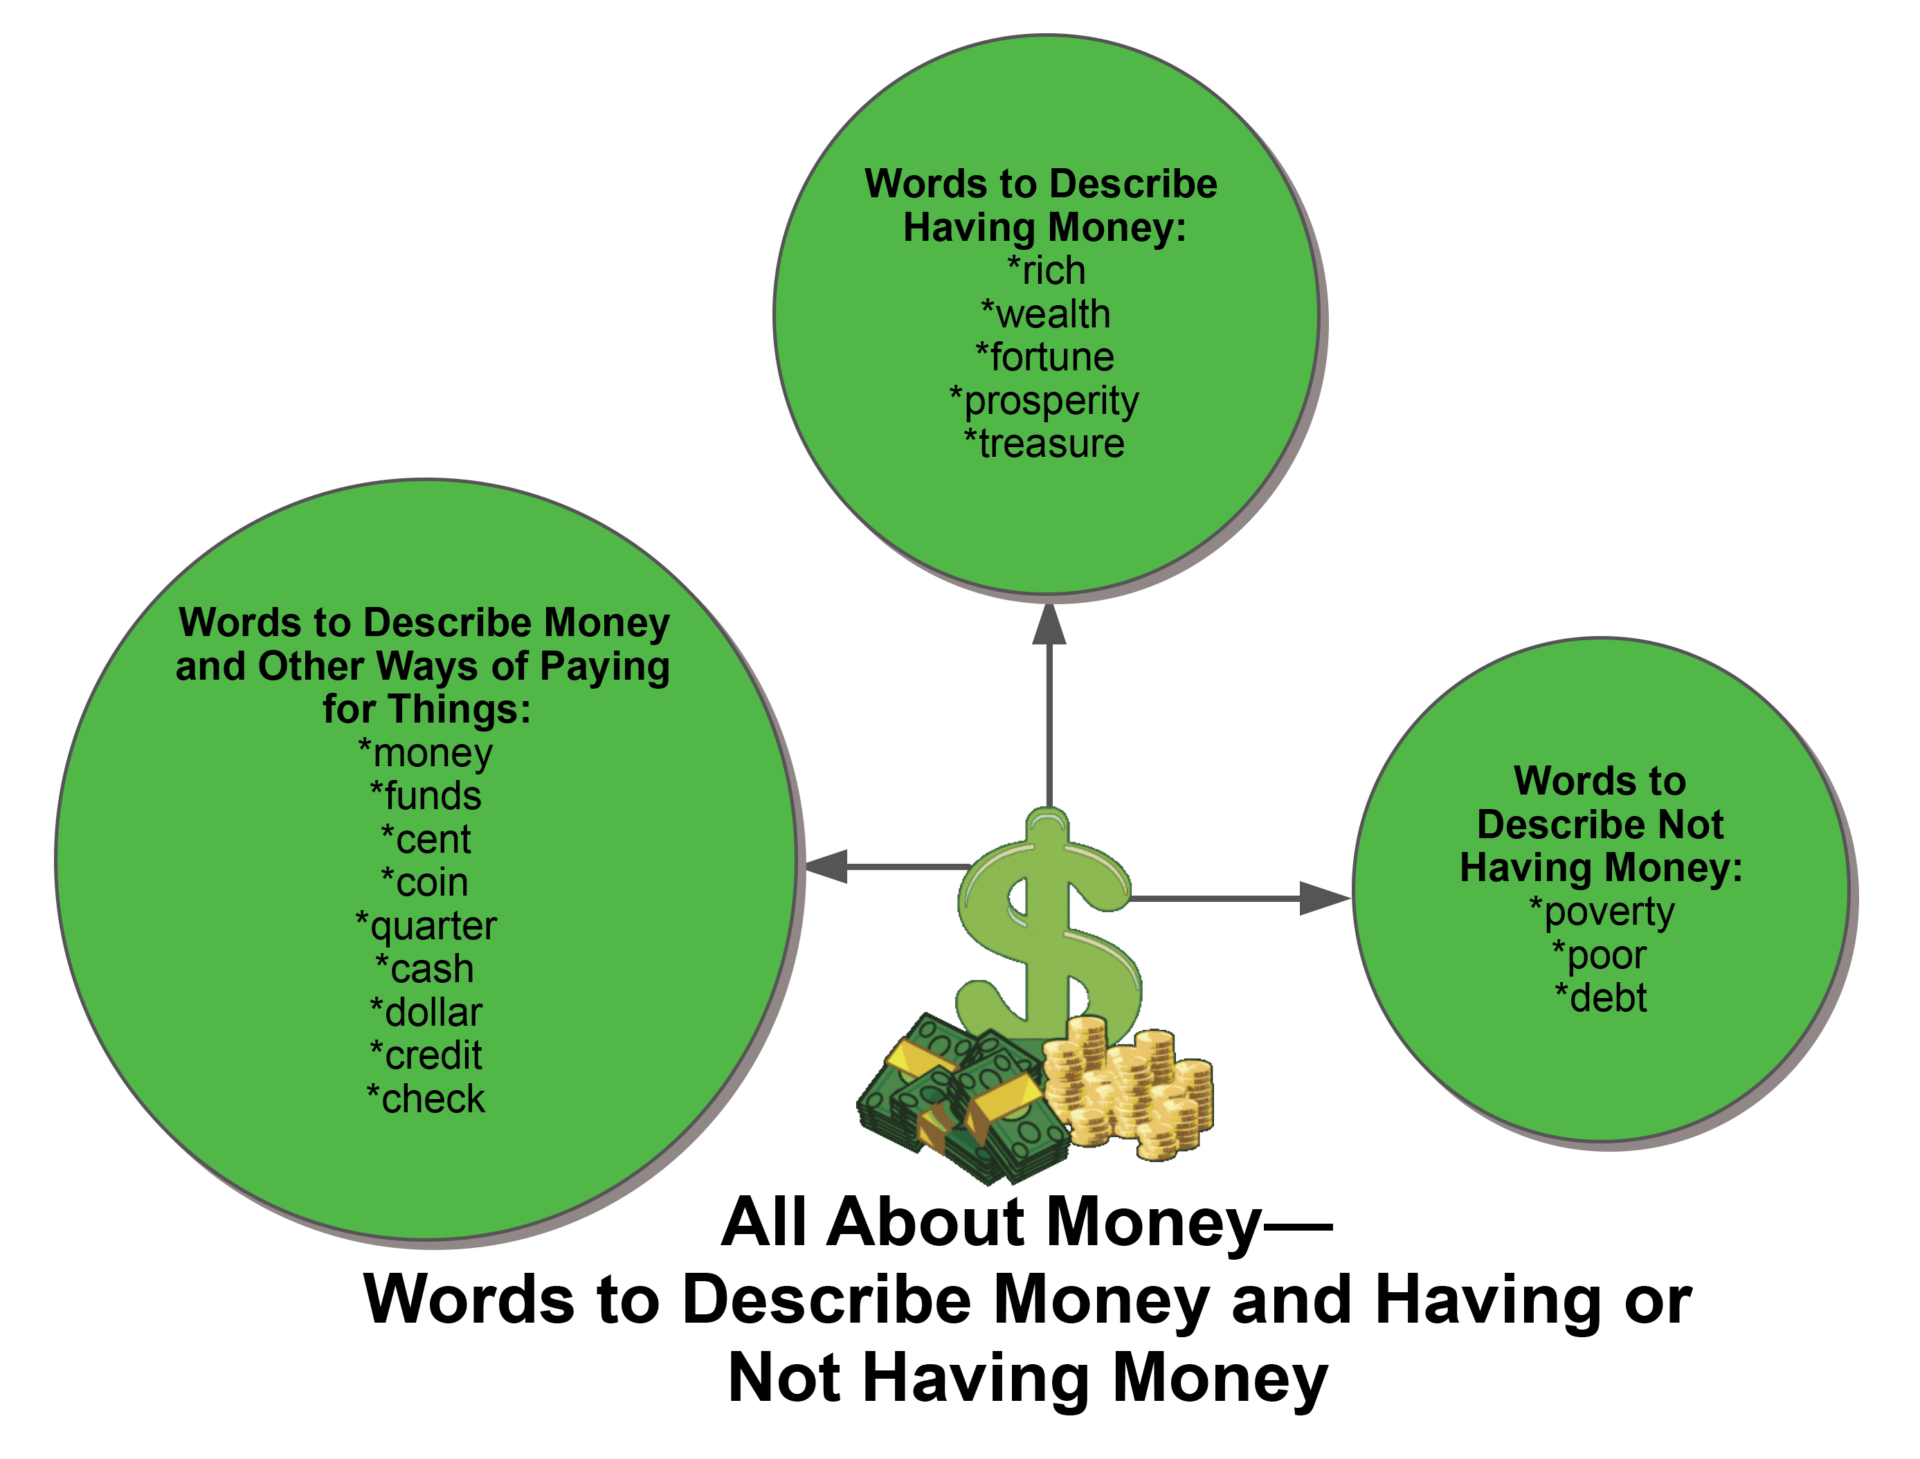 Listing money